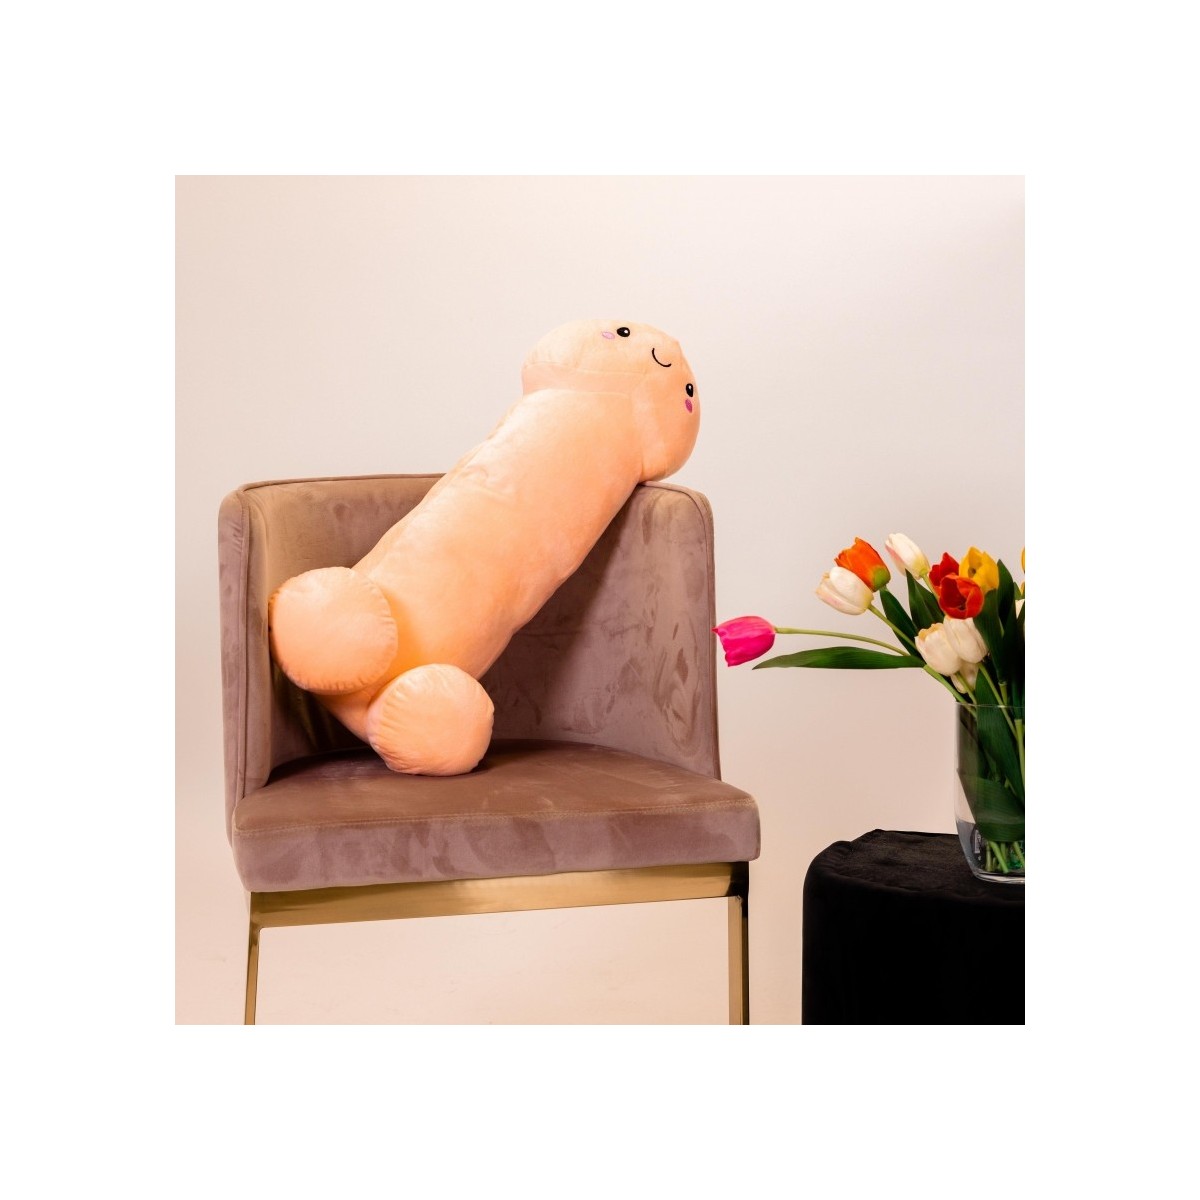 Acquista Peluches a forma di pene Penis Plushie 60 cm su MyShopSecret